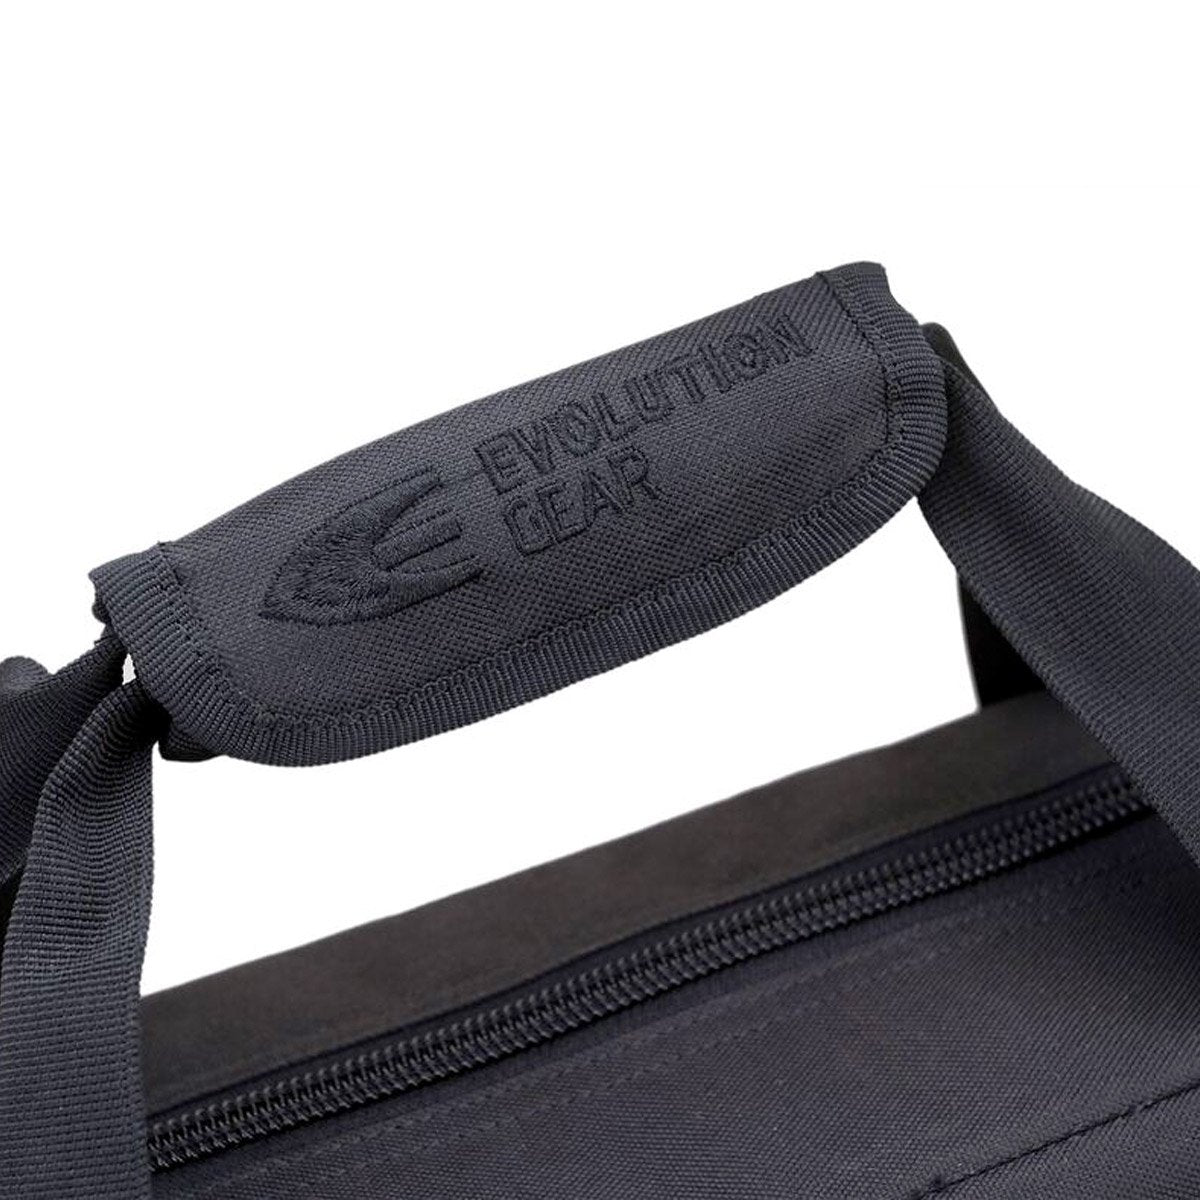 Evolution Gear 36 Inch Double Soft Rifle Bag | Tactical Gear Australia Tactical Gear